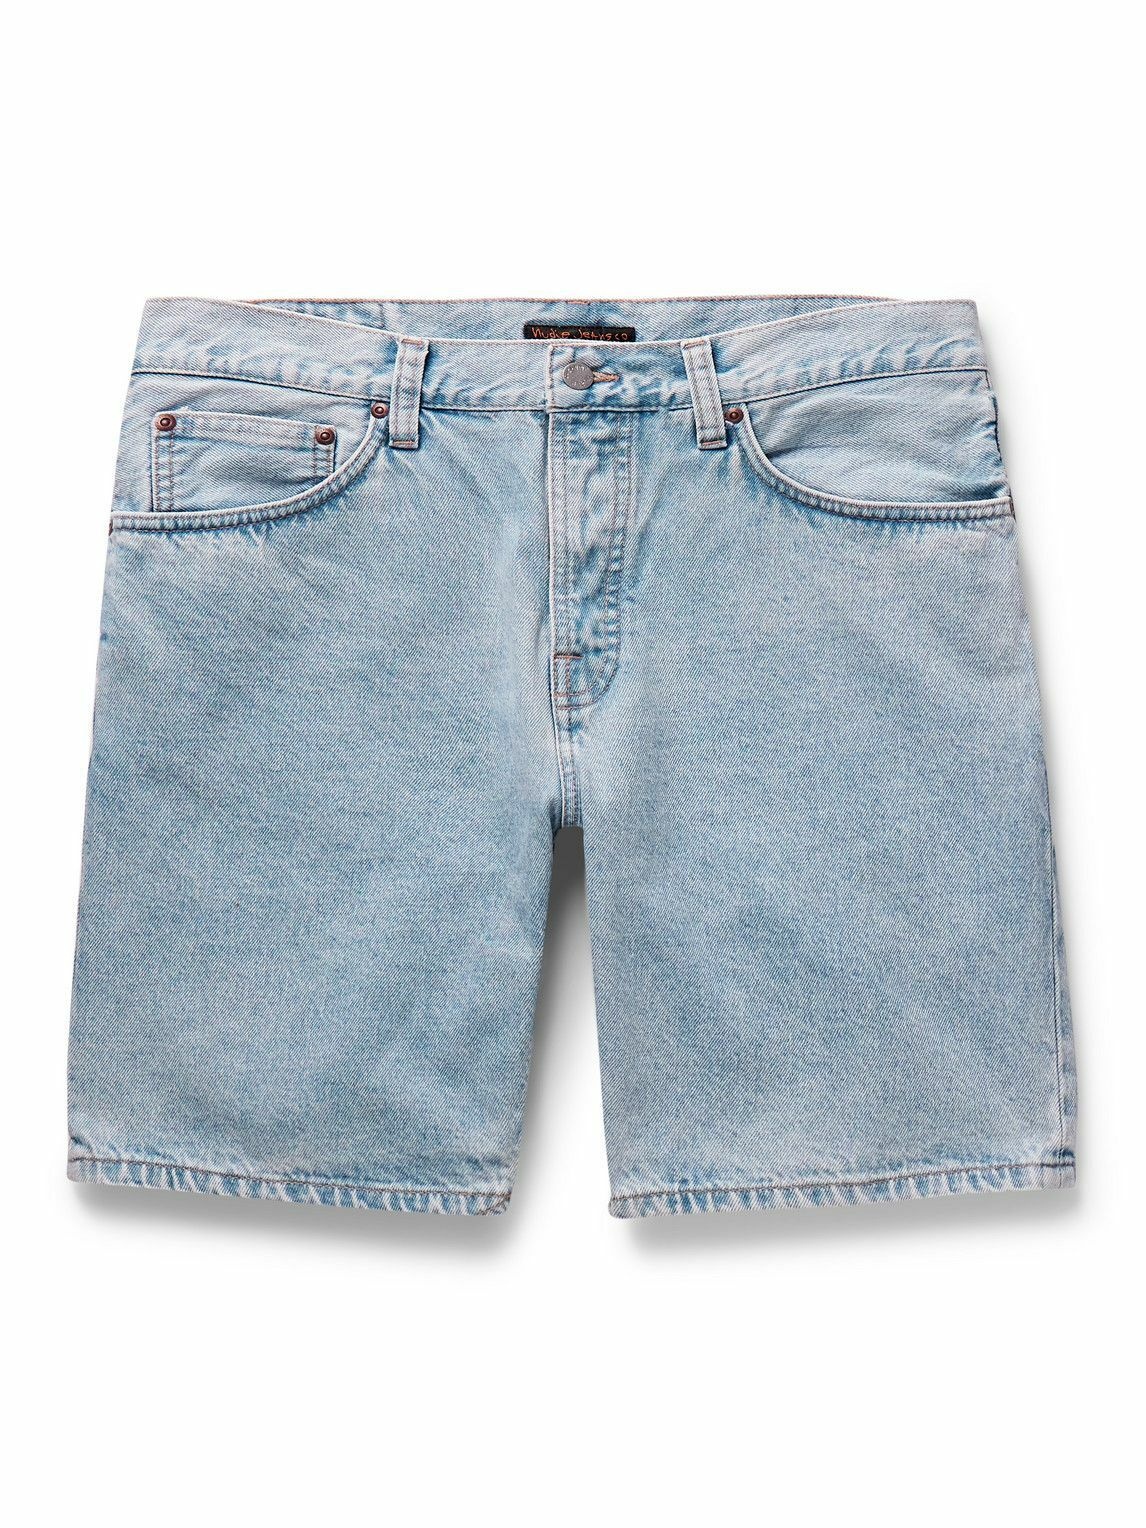 Nudie Jeans - Seth Straight-Leg Denim Shorts - Blue Nudie Jeans Co